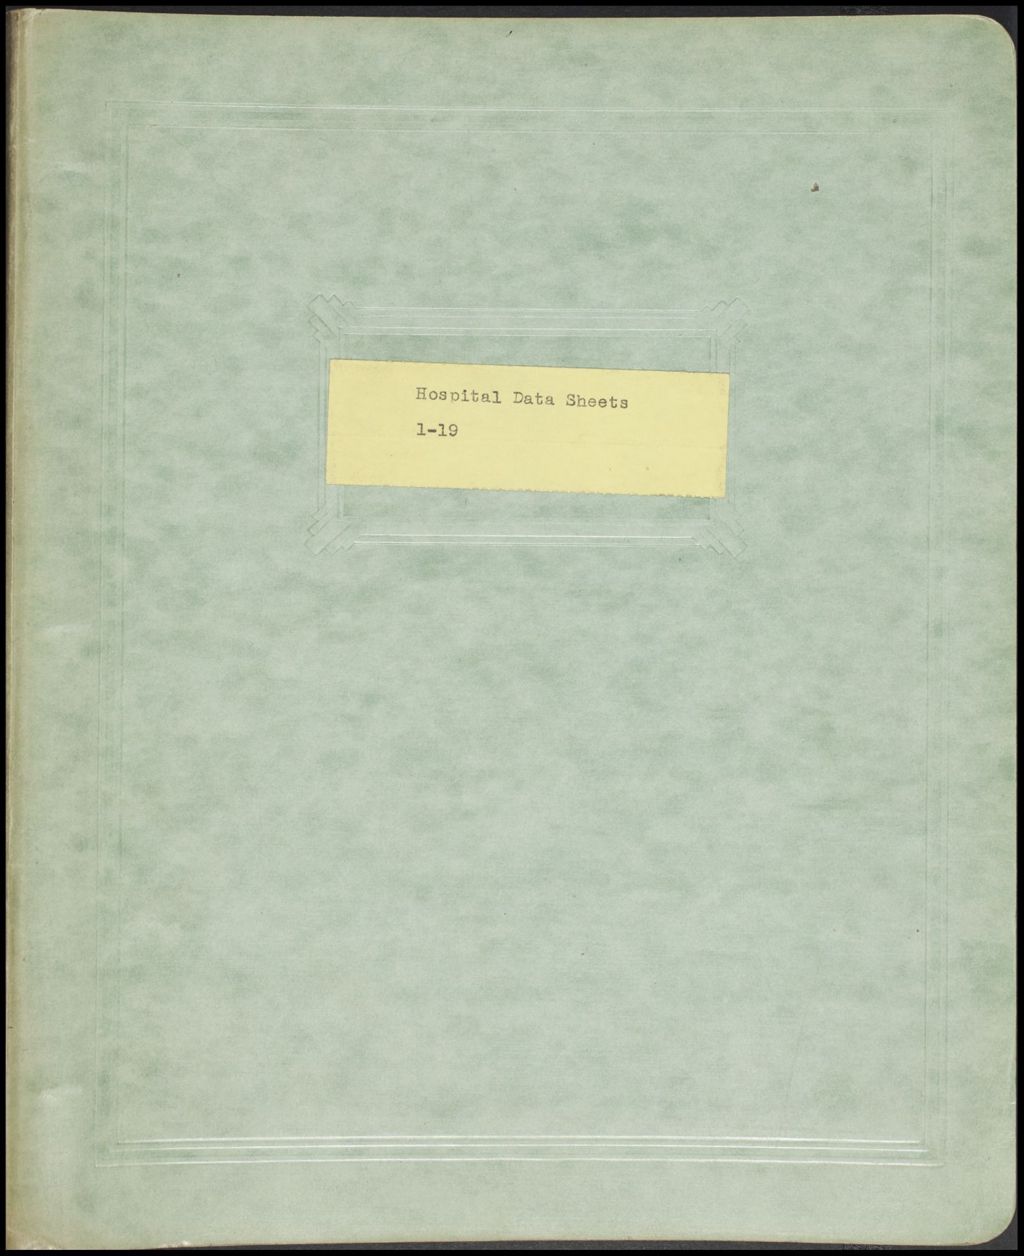 Hospital Data Sheets Census Data, 1956 (Folder III-179)